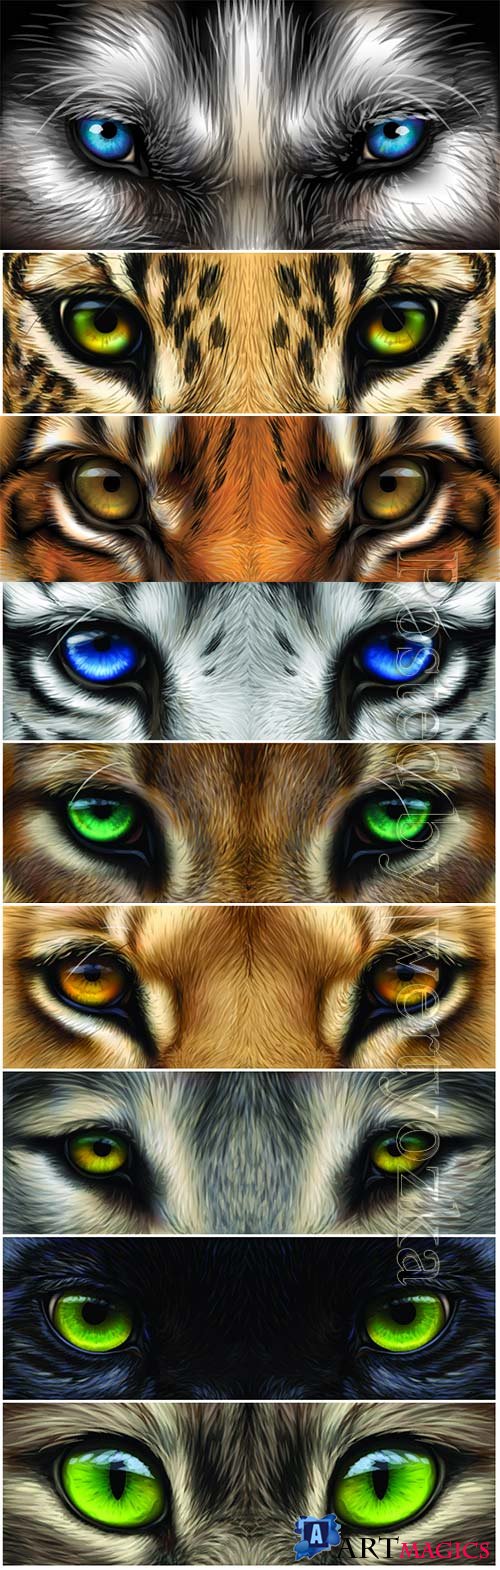 Big eyes animals close-up